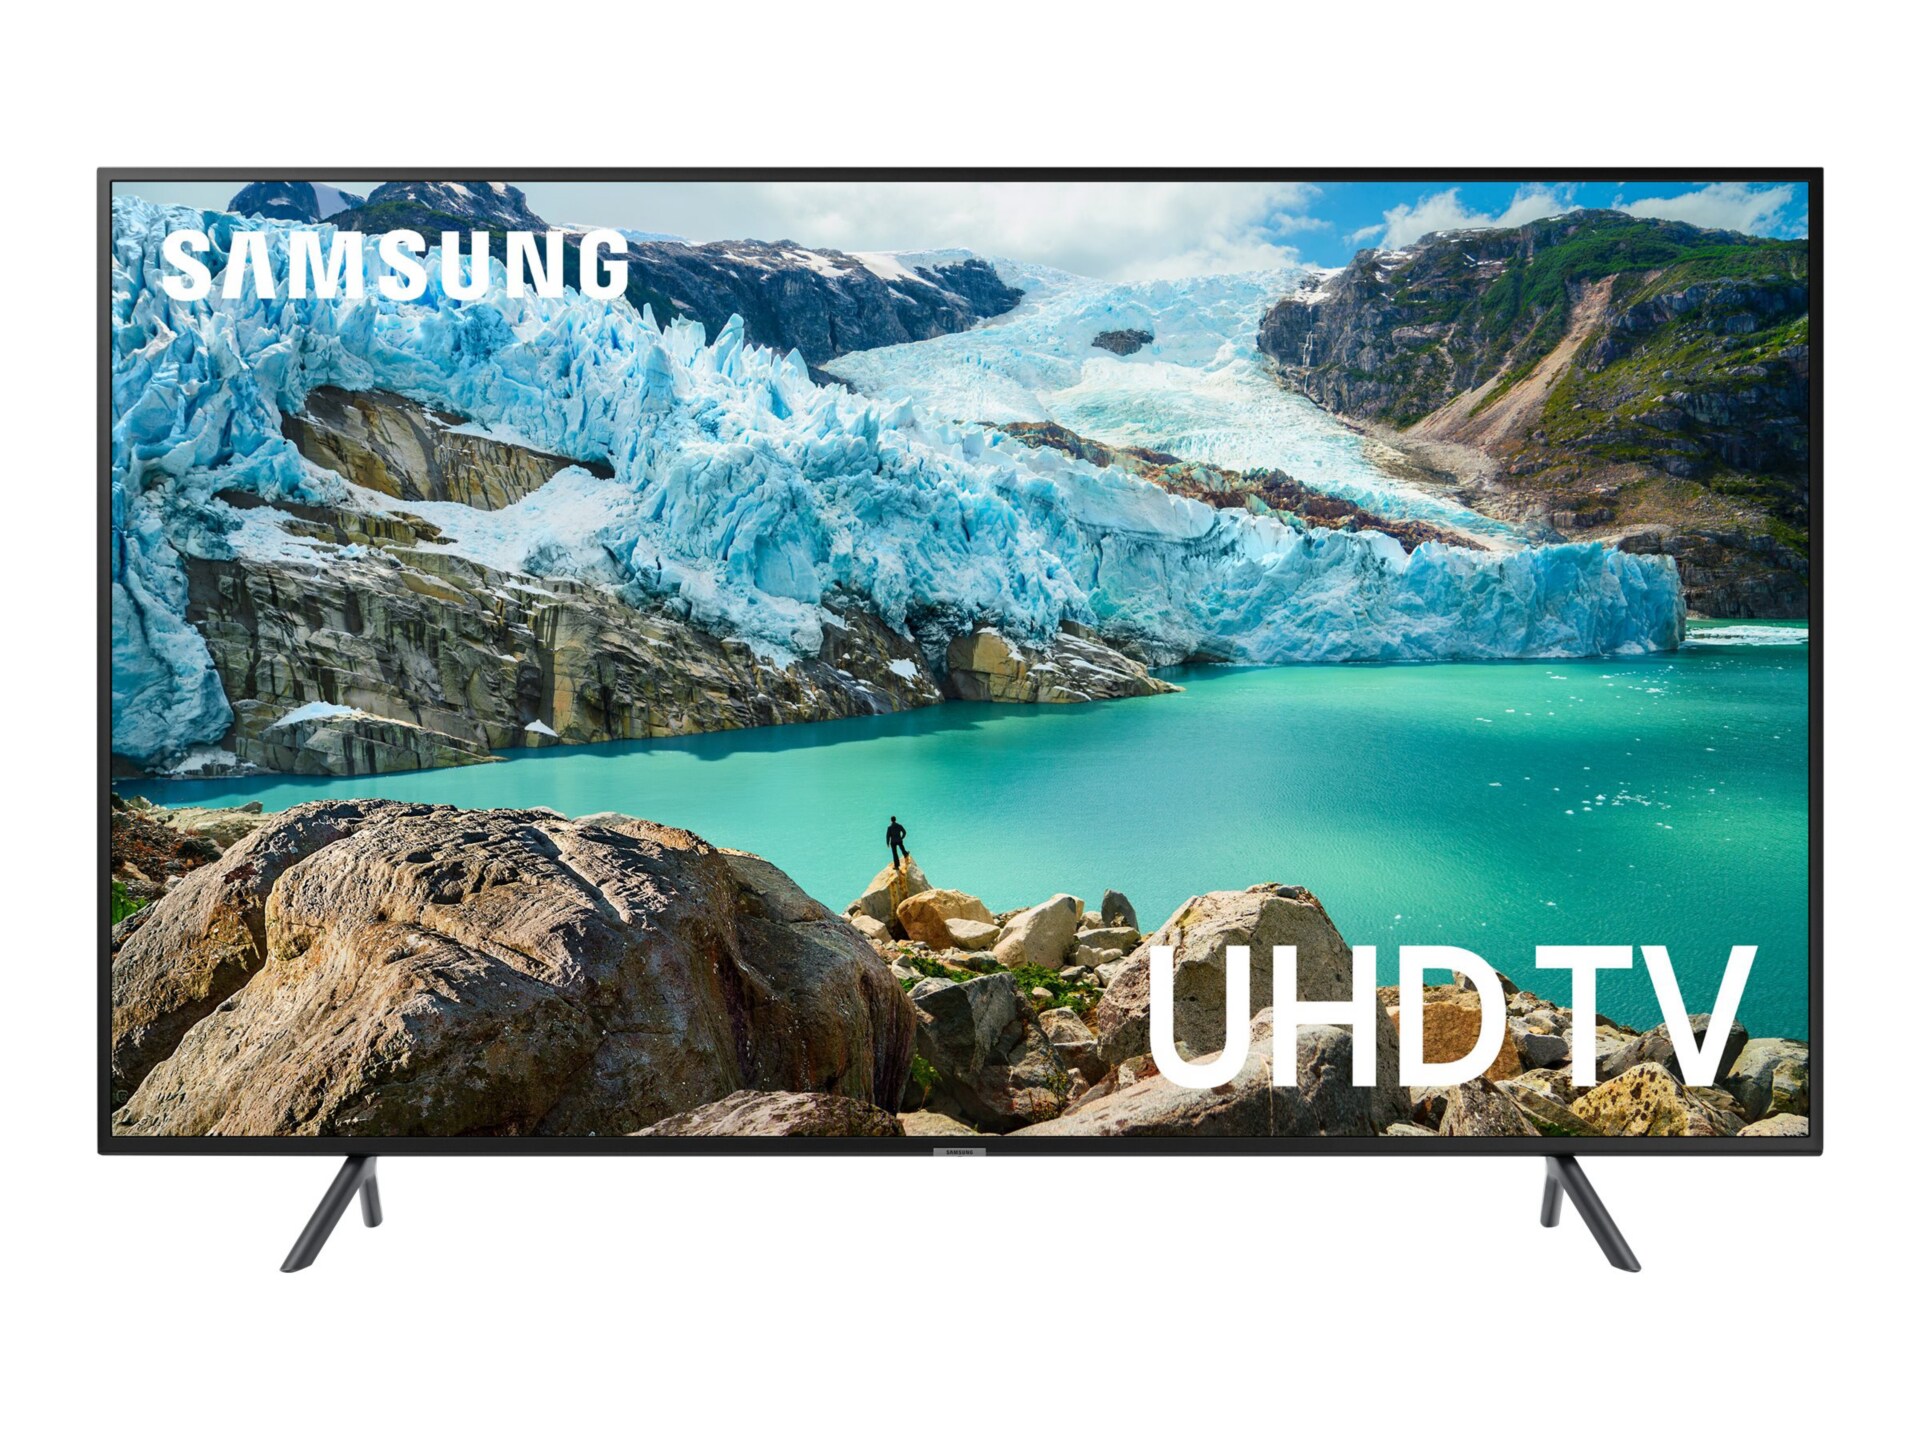 Samsung UN55RU7100F 7 Series - 55" Class (54.6" viewable) LED TV - 4K